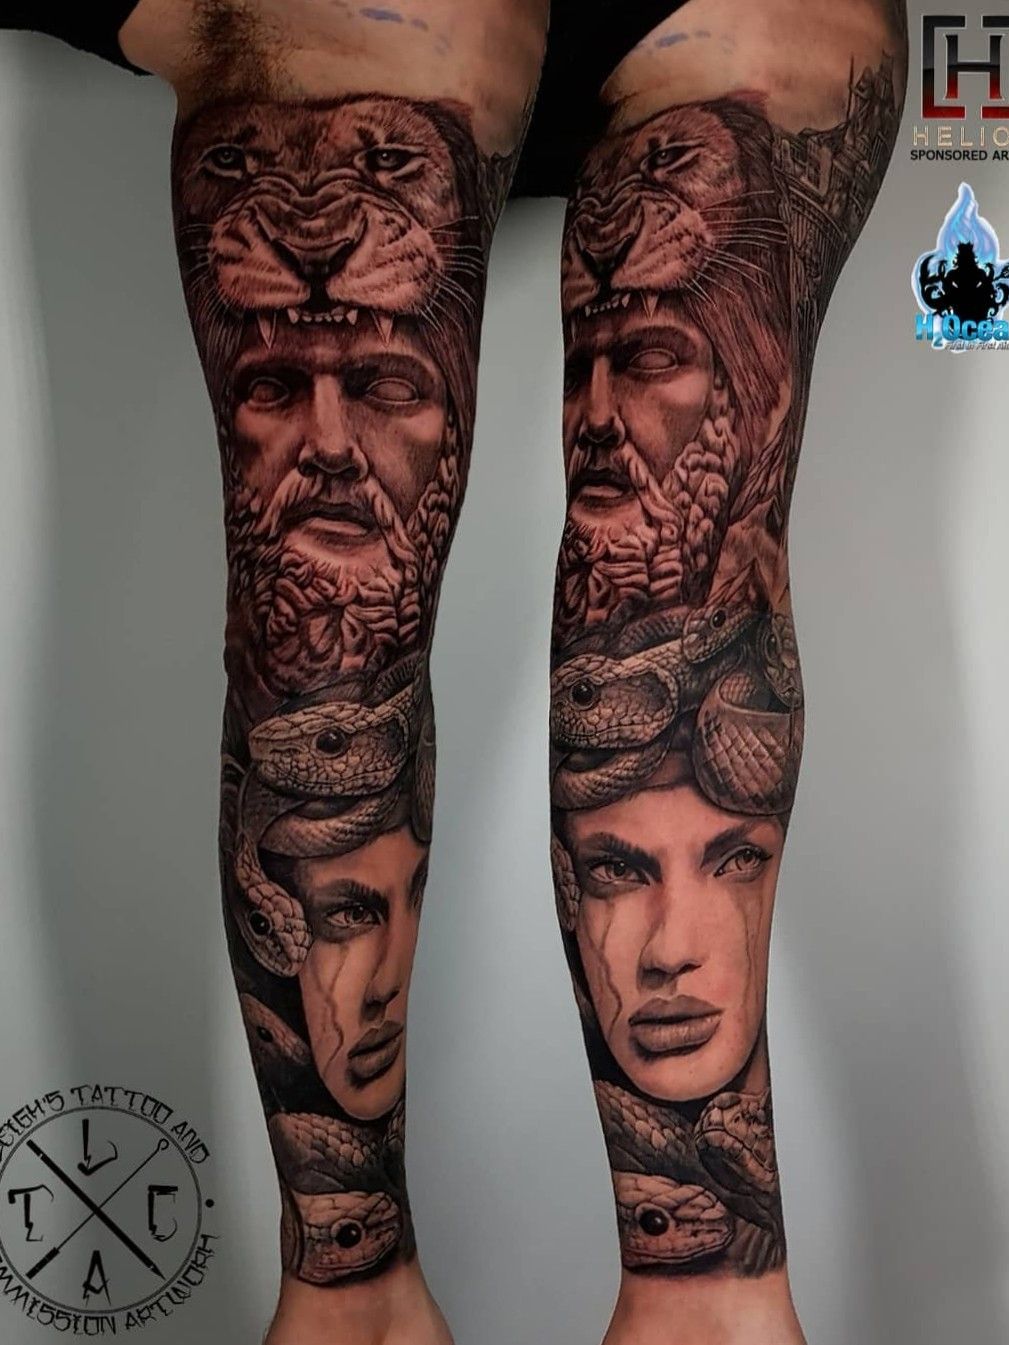 Interesting Zeus sleeve tattoos